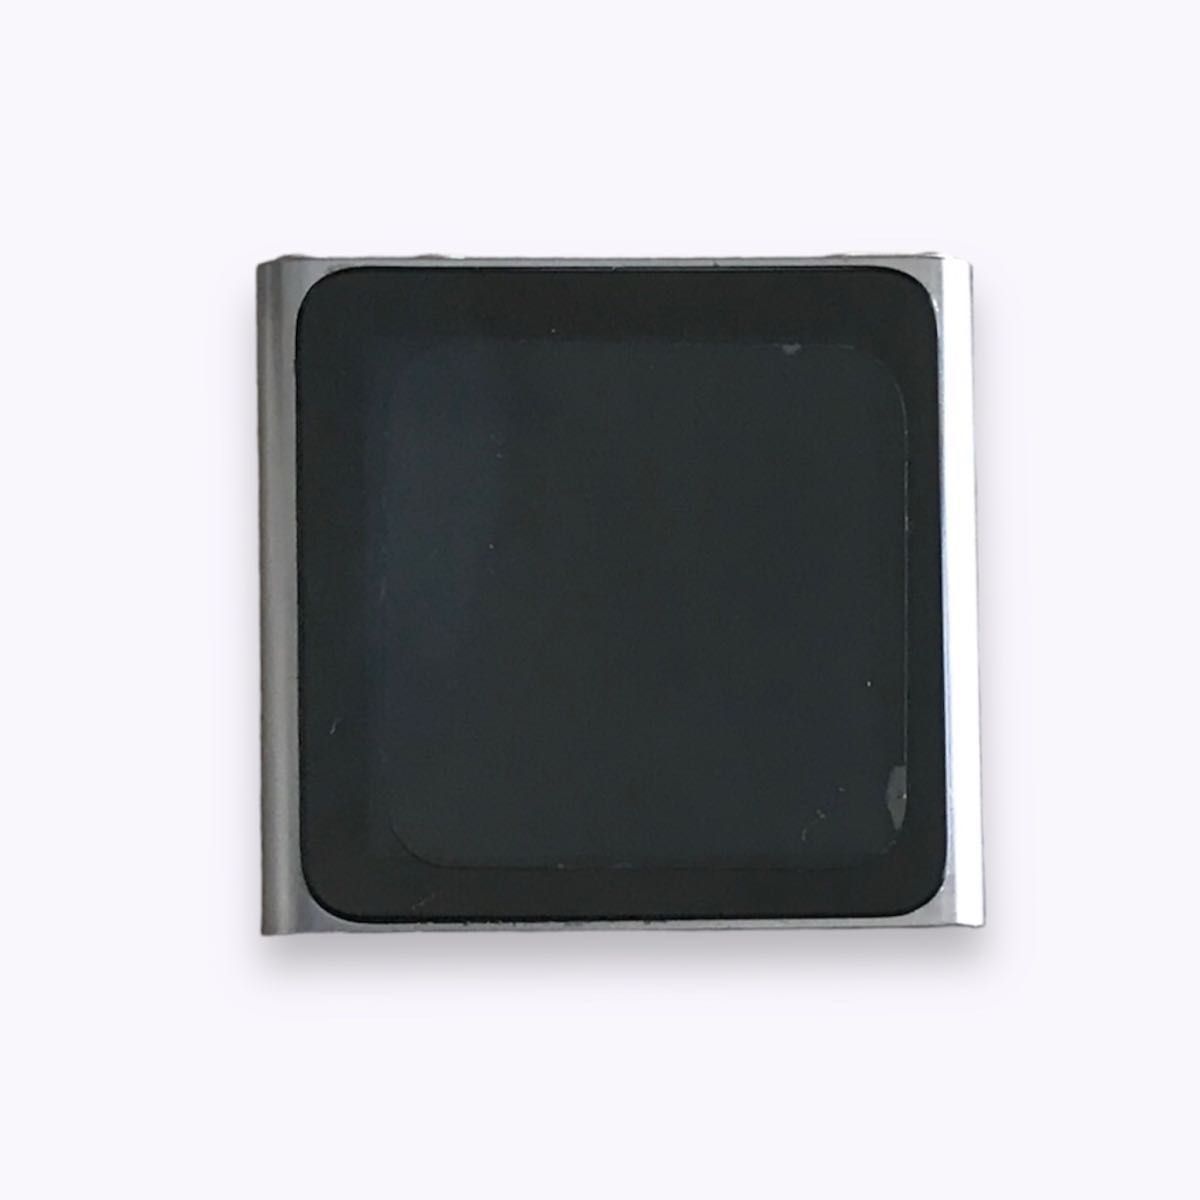 Apple アップル iPod nano 第6世代 8GB (本体のみ)